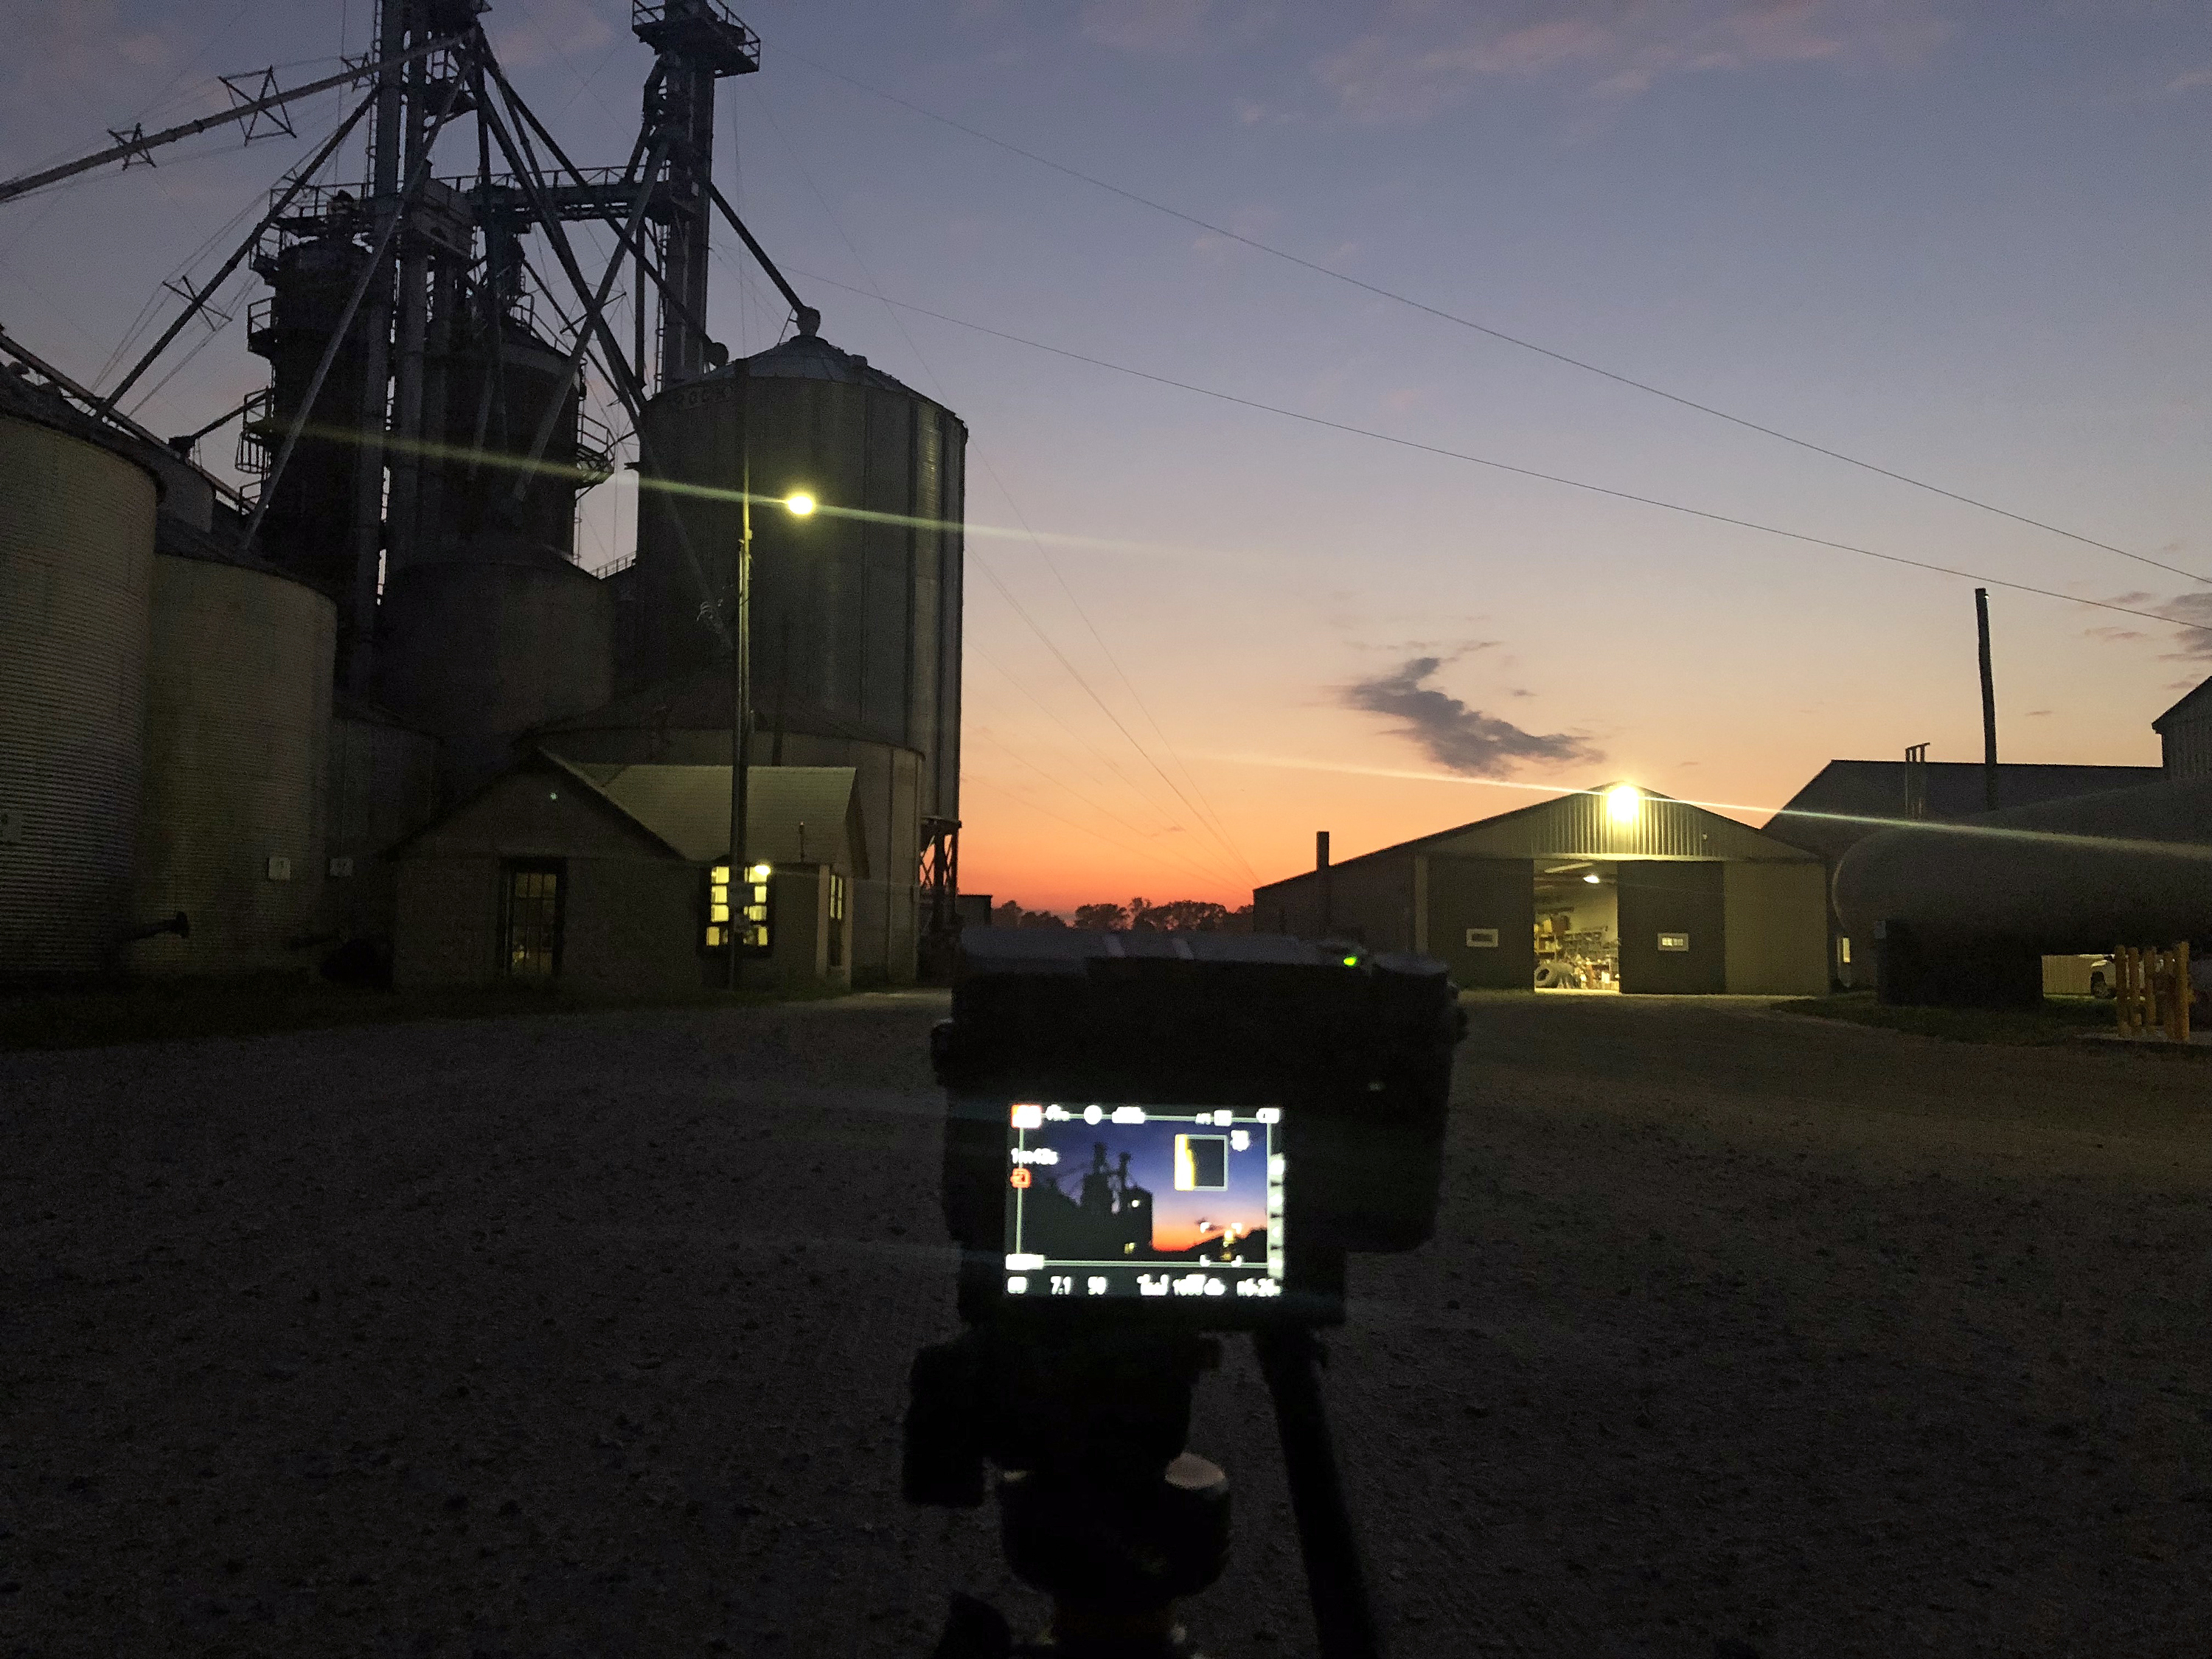 sunset production shot at Harborview Farms, September 2019